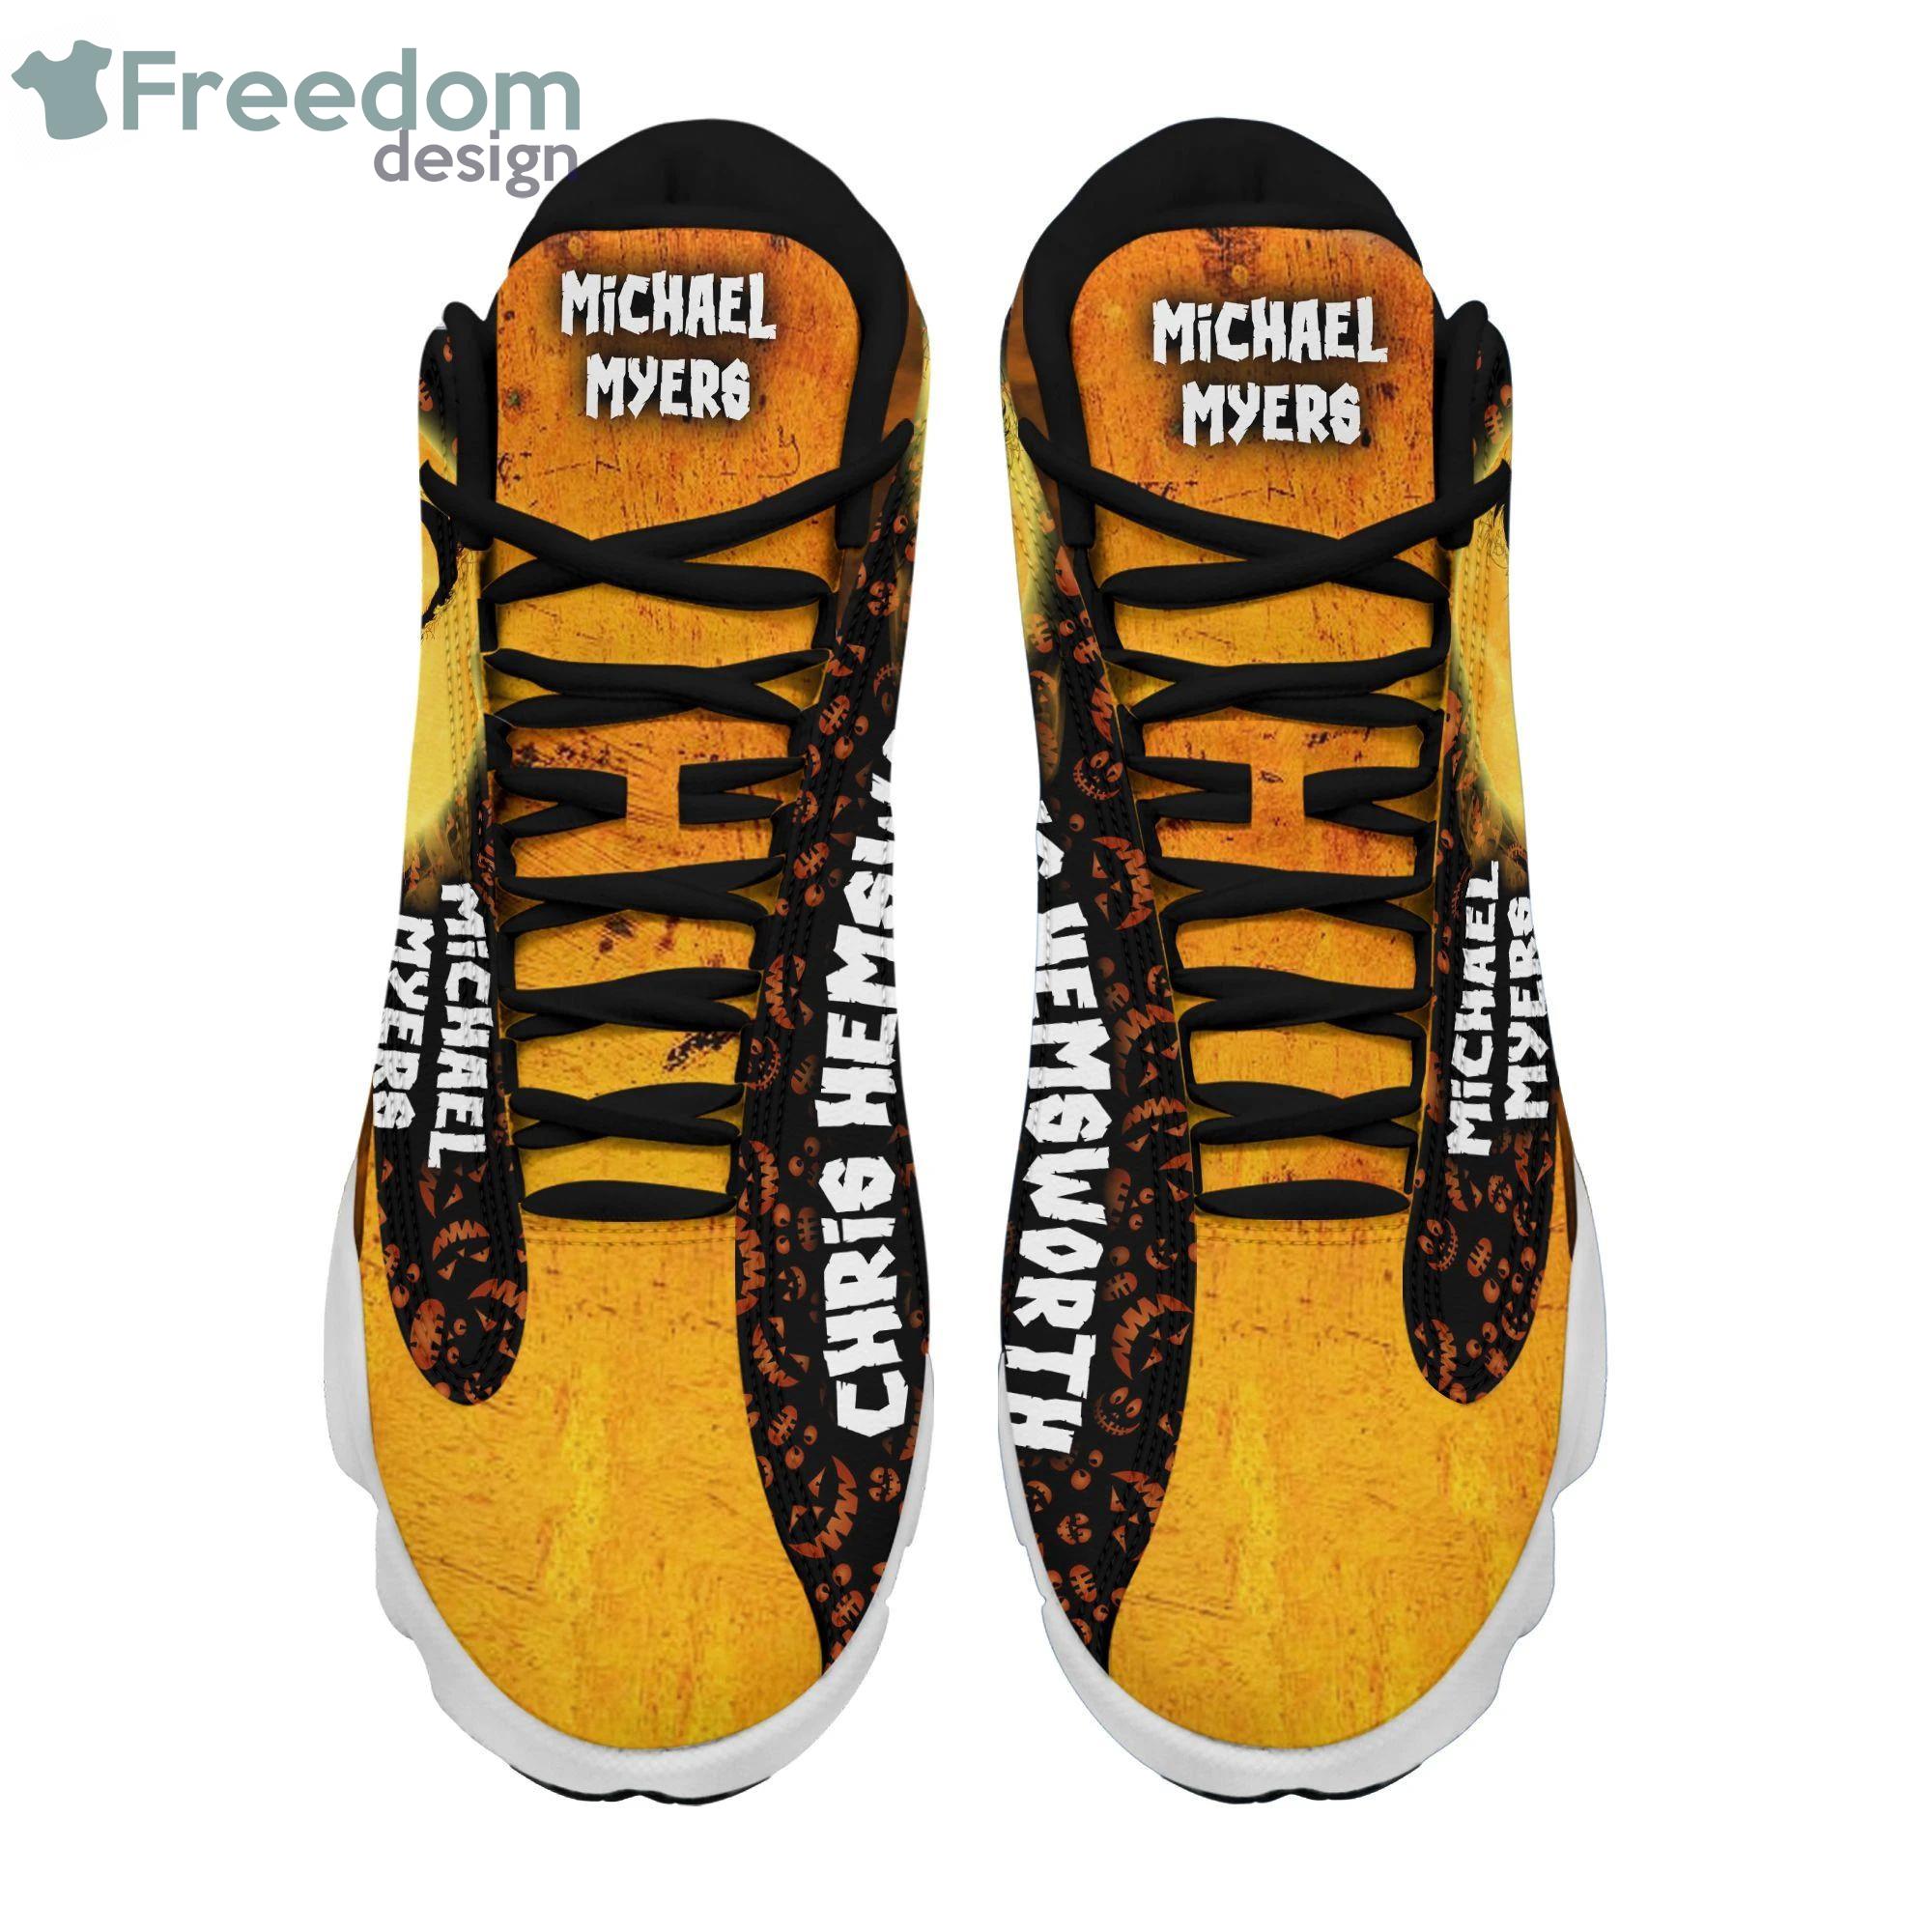 Personalized Michael Myers Halloween Night Air Jordan 13 Shoes